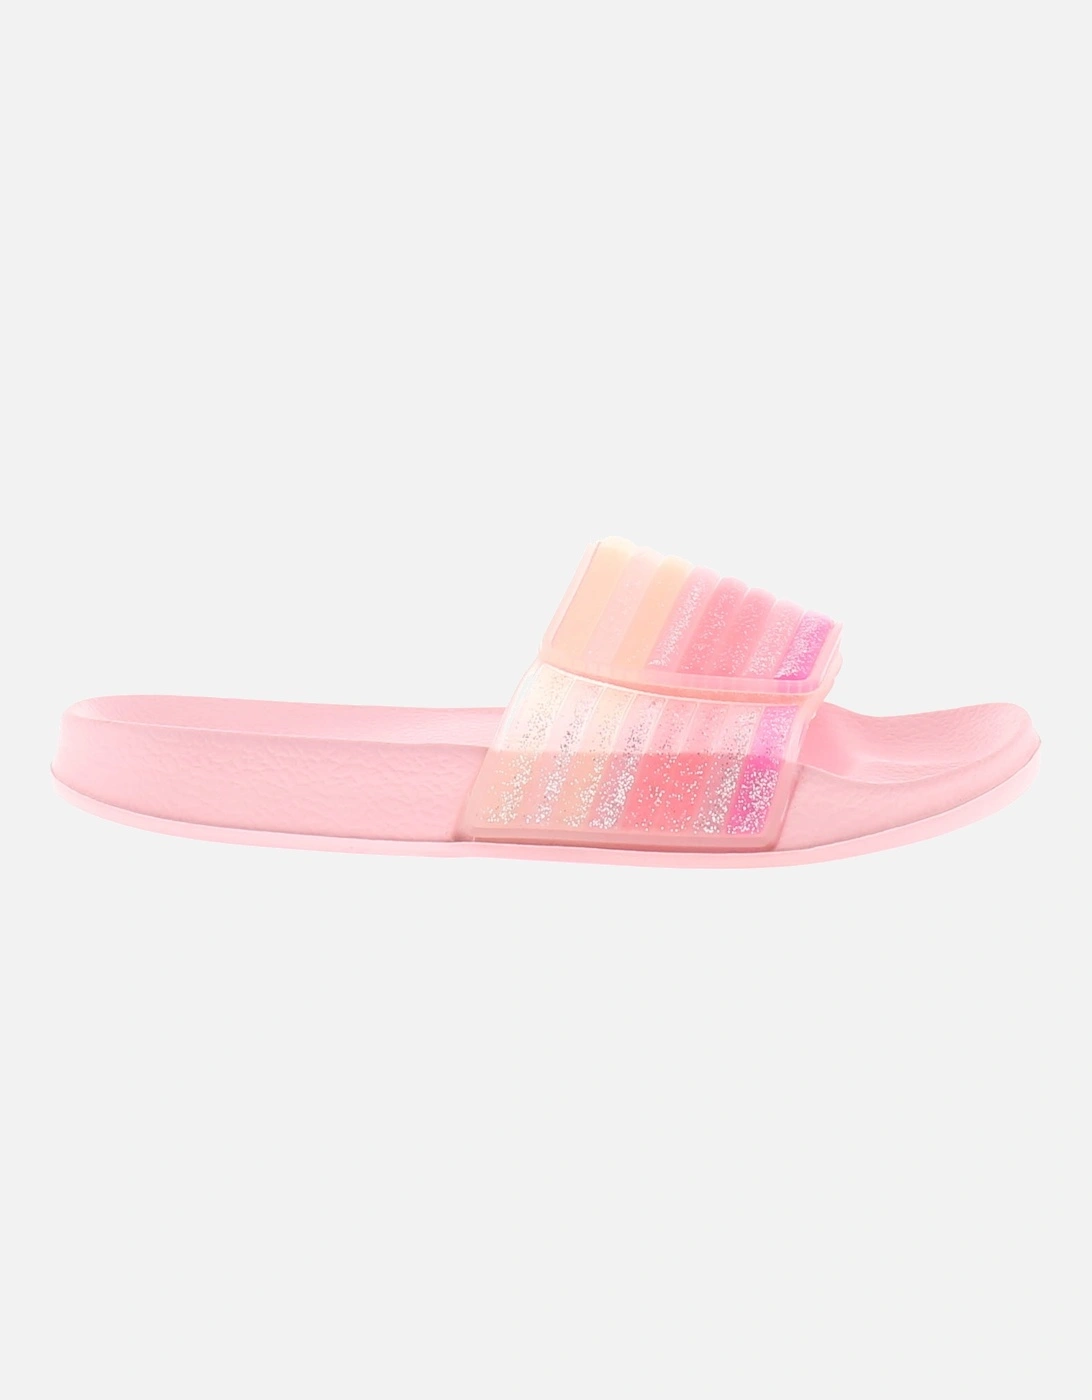 Girls Sandals Sliders Glitter pink UK Size